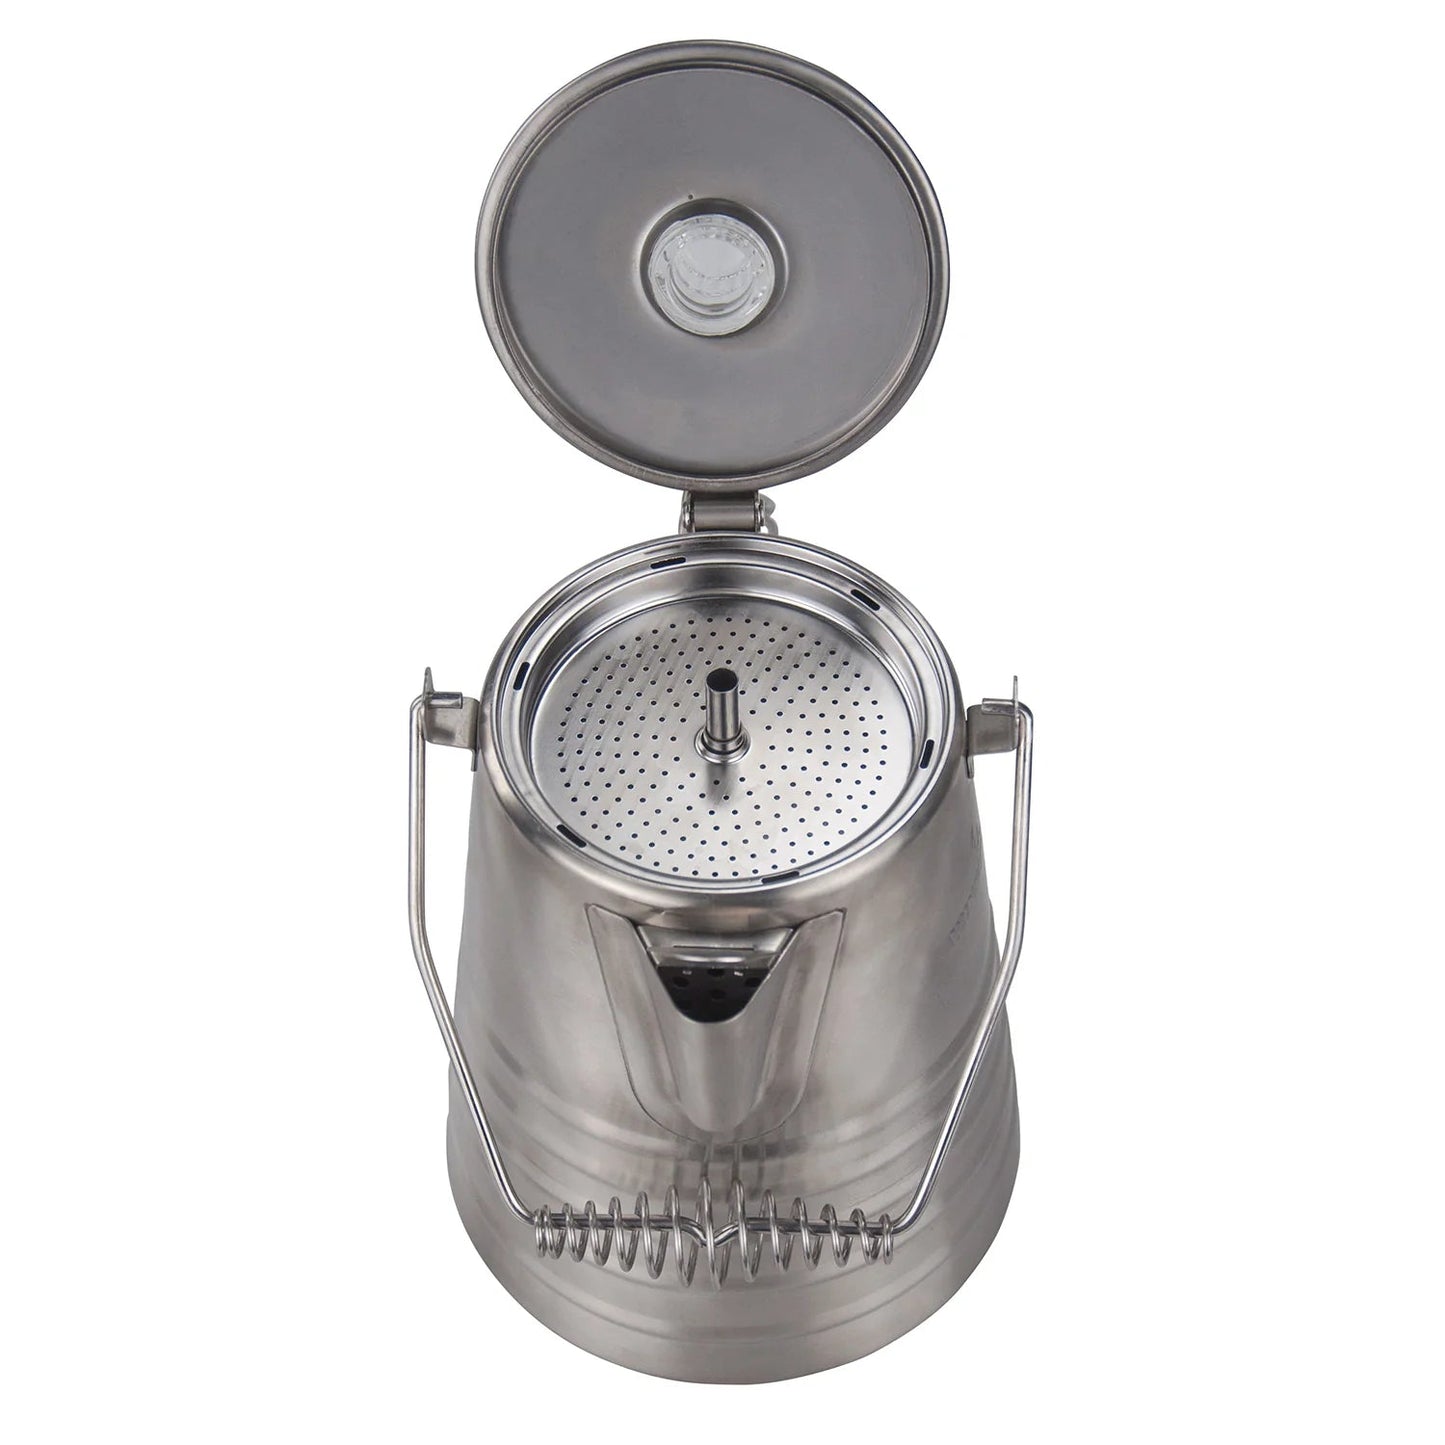 Winnerwell - 14 Cup Stainless Steel Percolator Coffee Pot - Big Horn Golfer